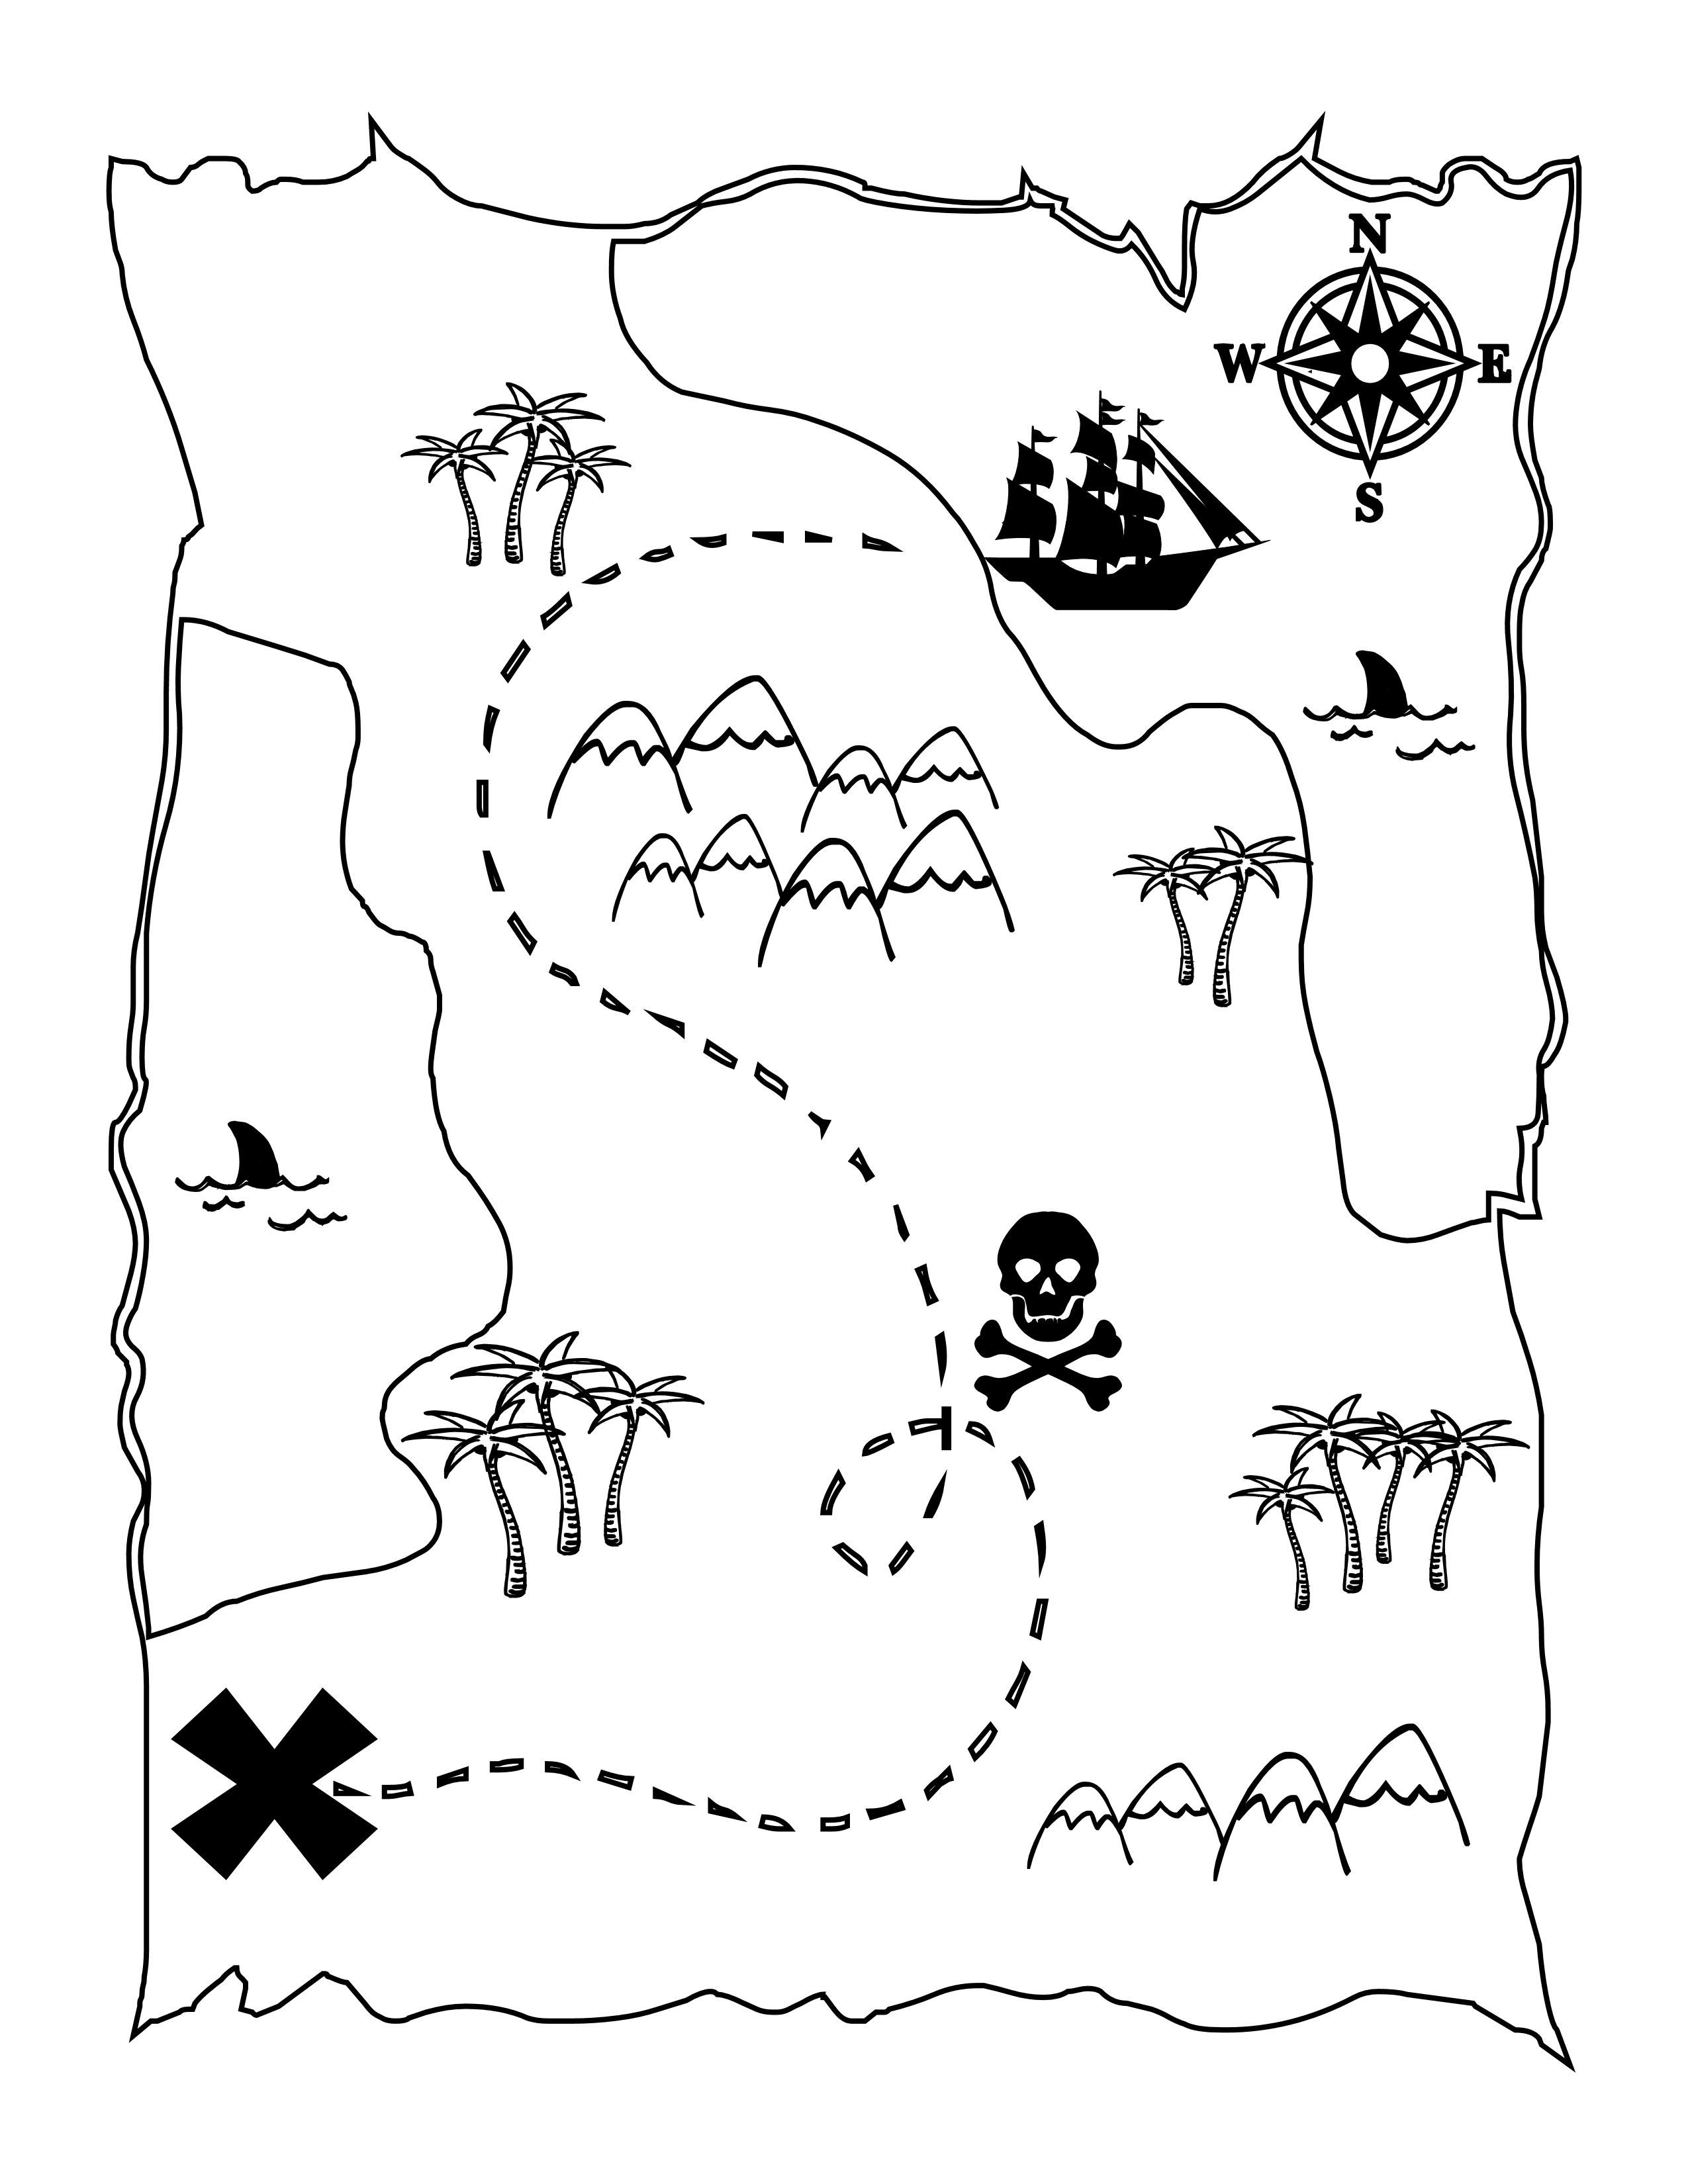 Printable Treasure Map Kids Activity | Printables | Pinterest - Free Printable Pirate Maps